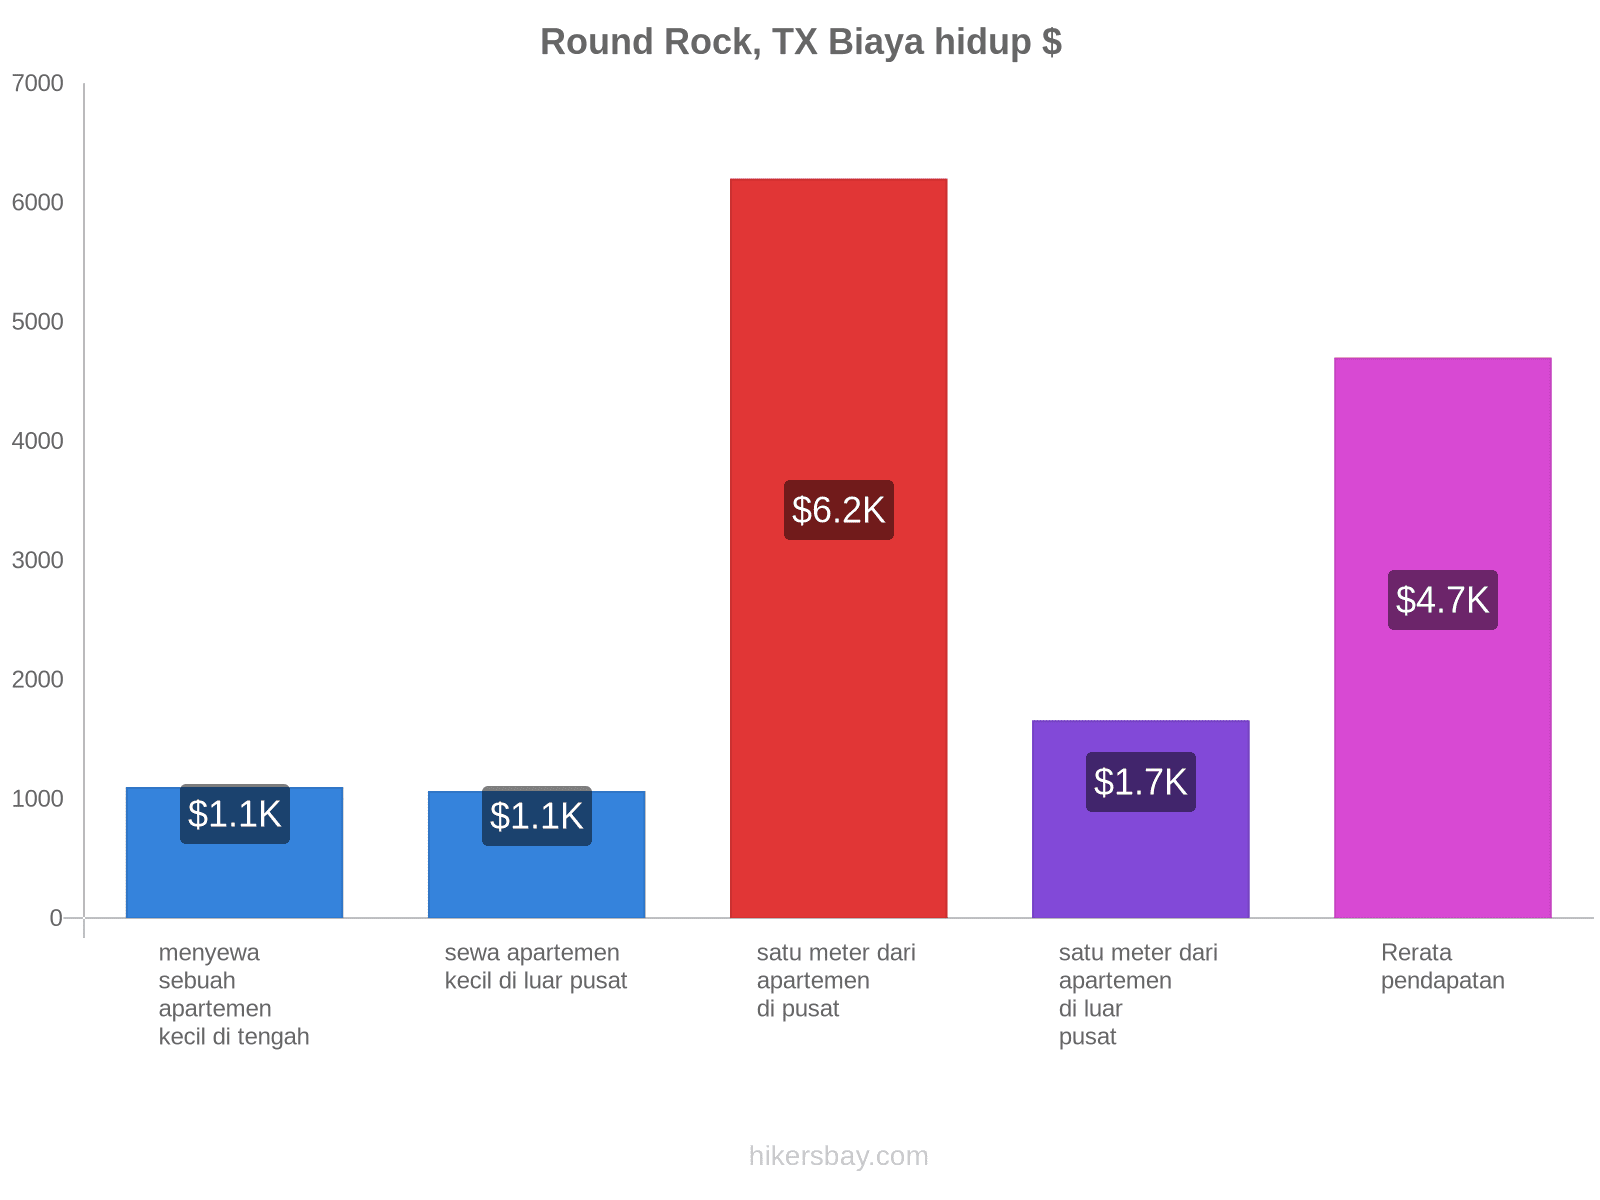 Round Rock, TX biaya hidup hikersbay.com